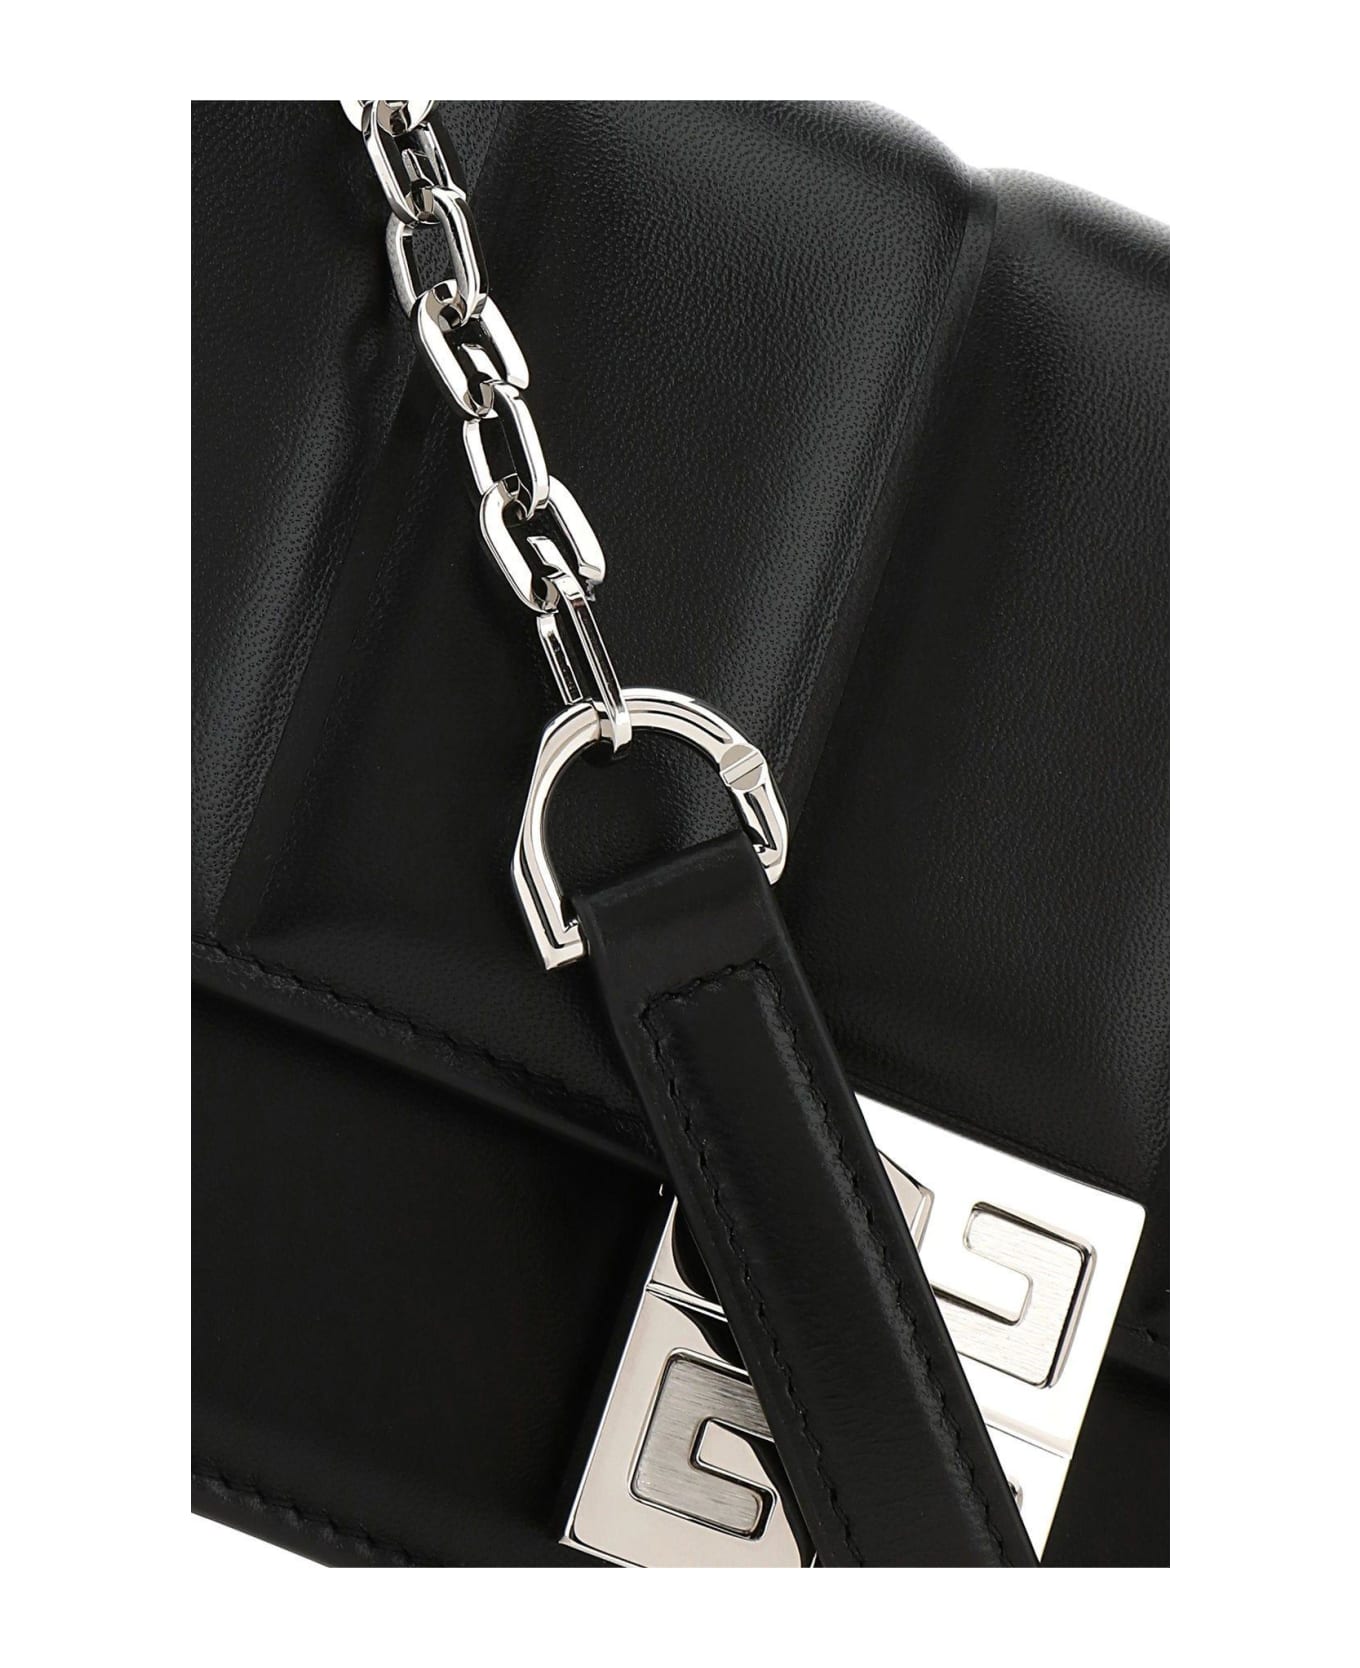 Givenchy Black Leather Medium 4g Crossbody Bag - BLACK